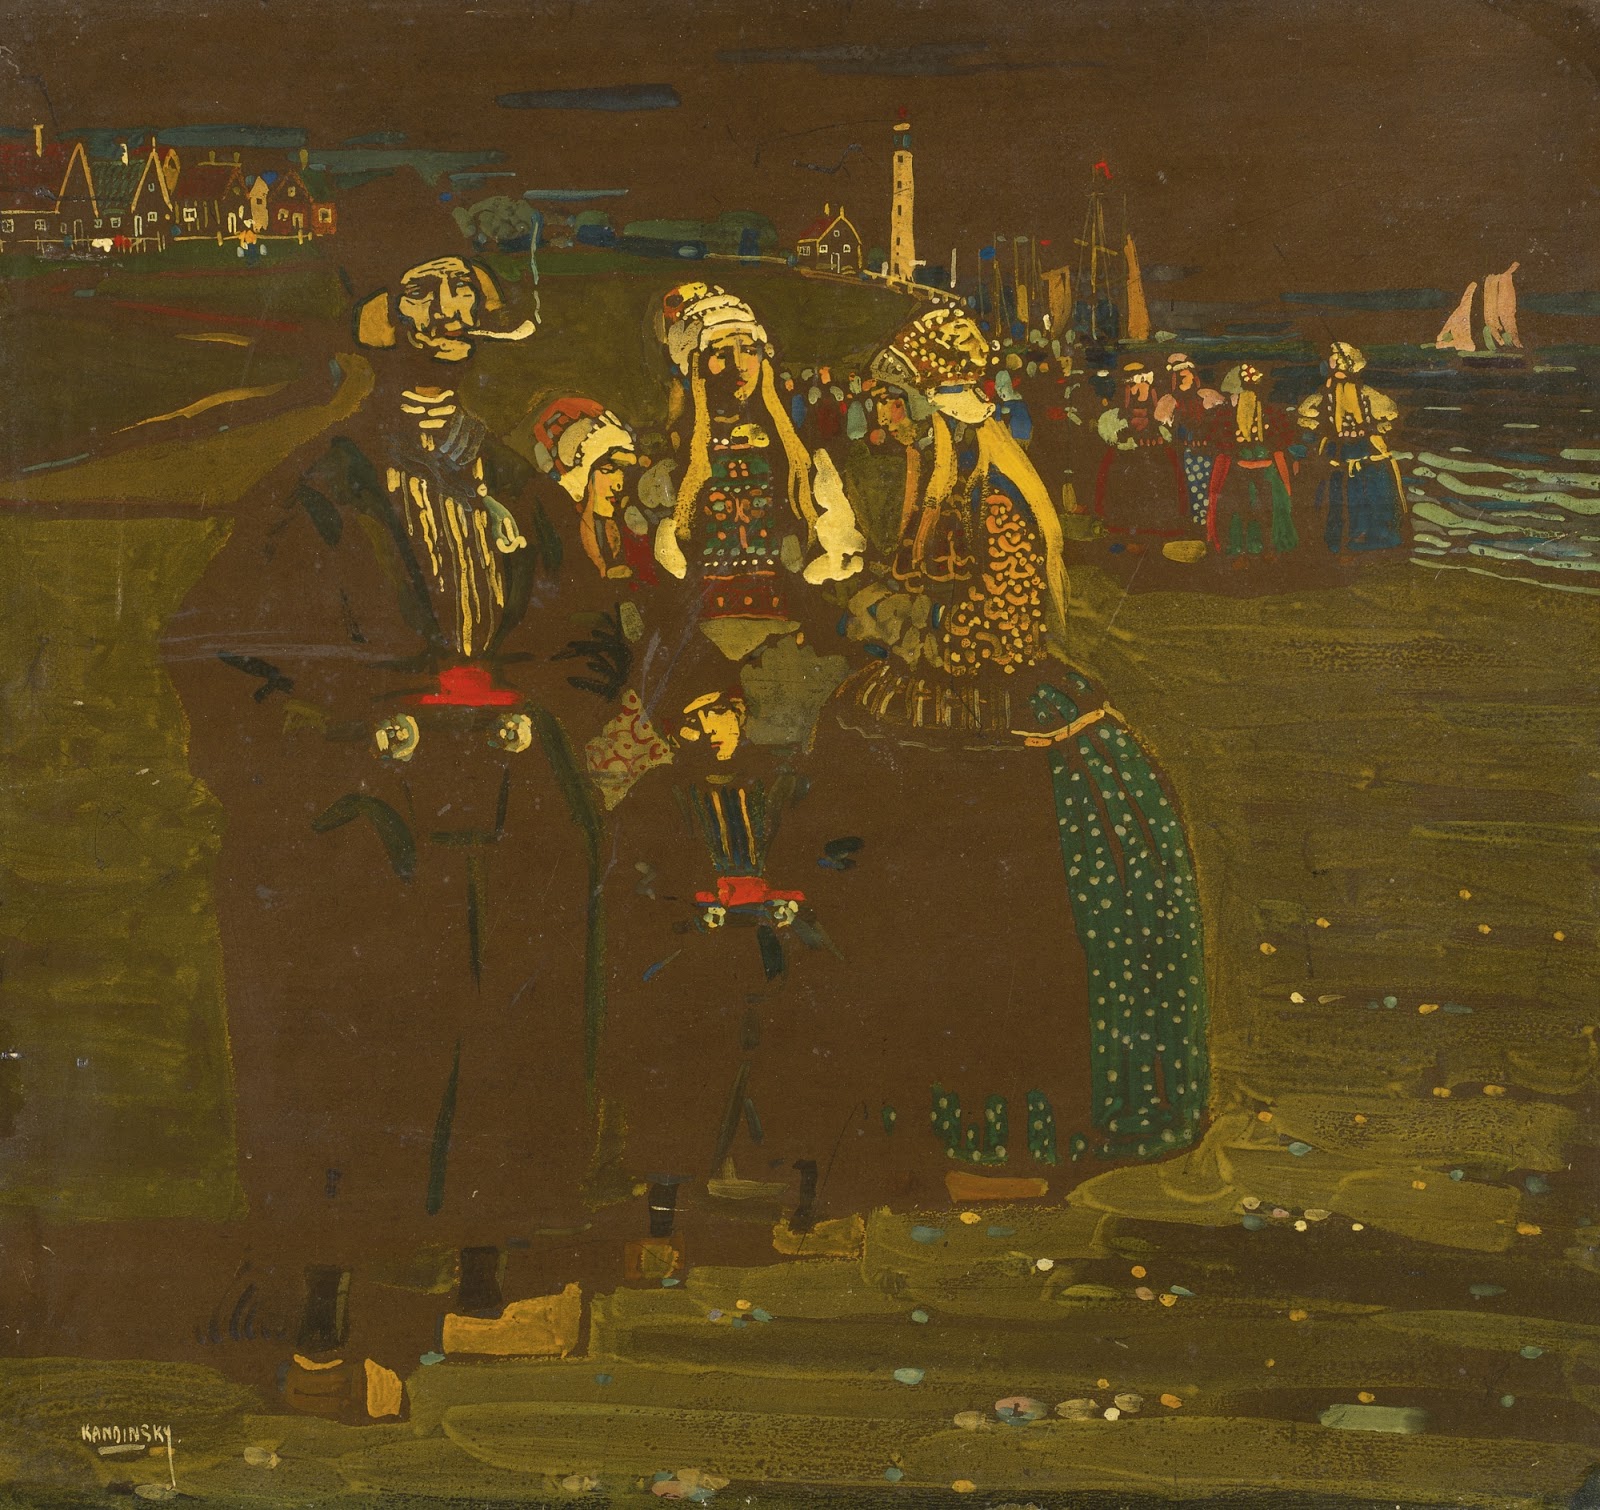 Wassily+Kandinsky-1866-1944 (390).jpg